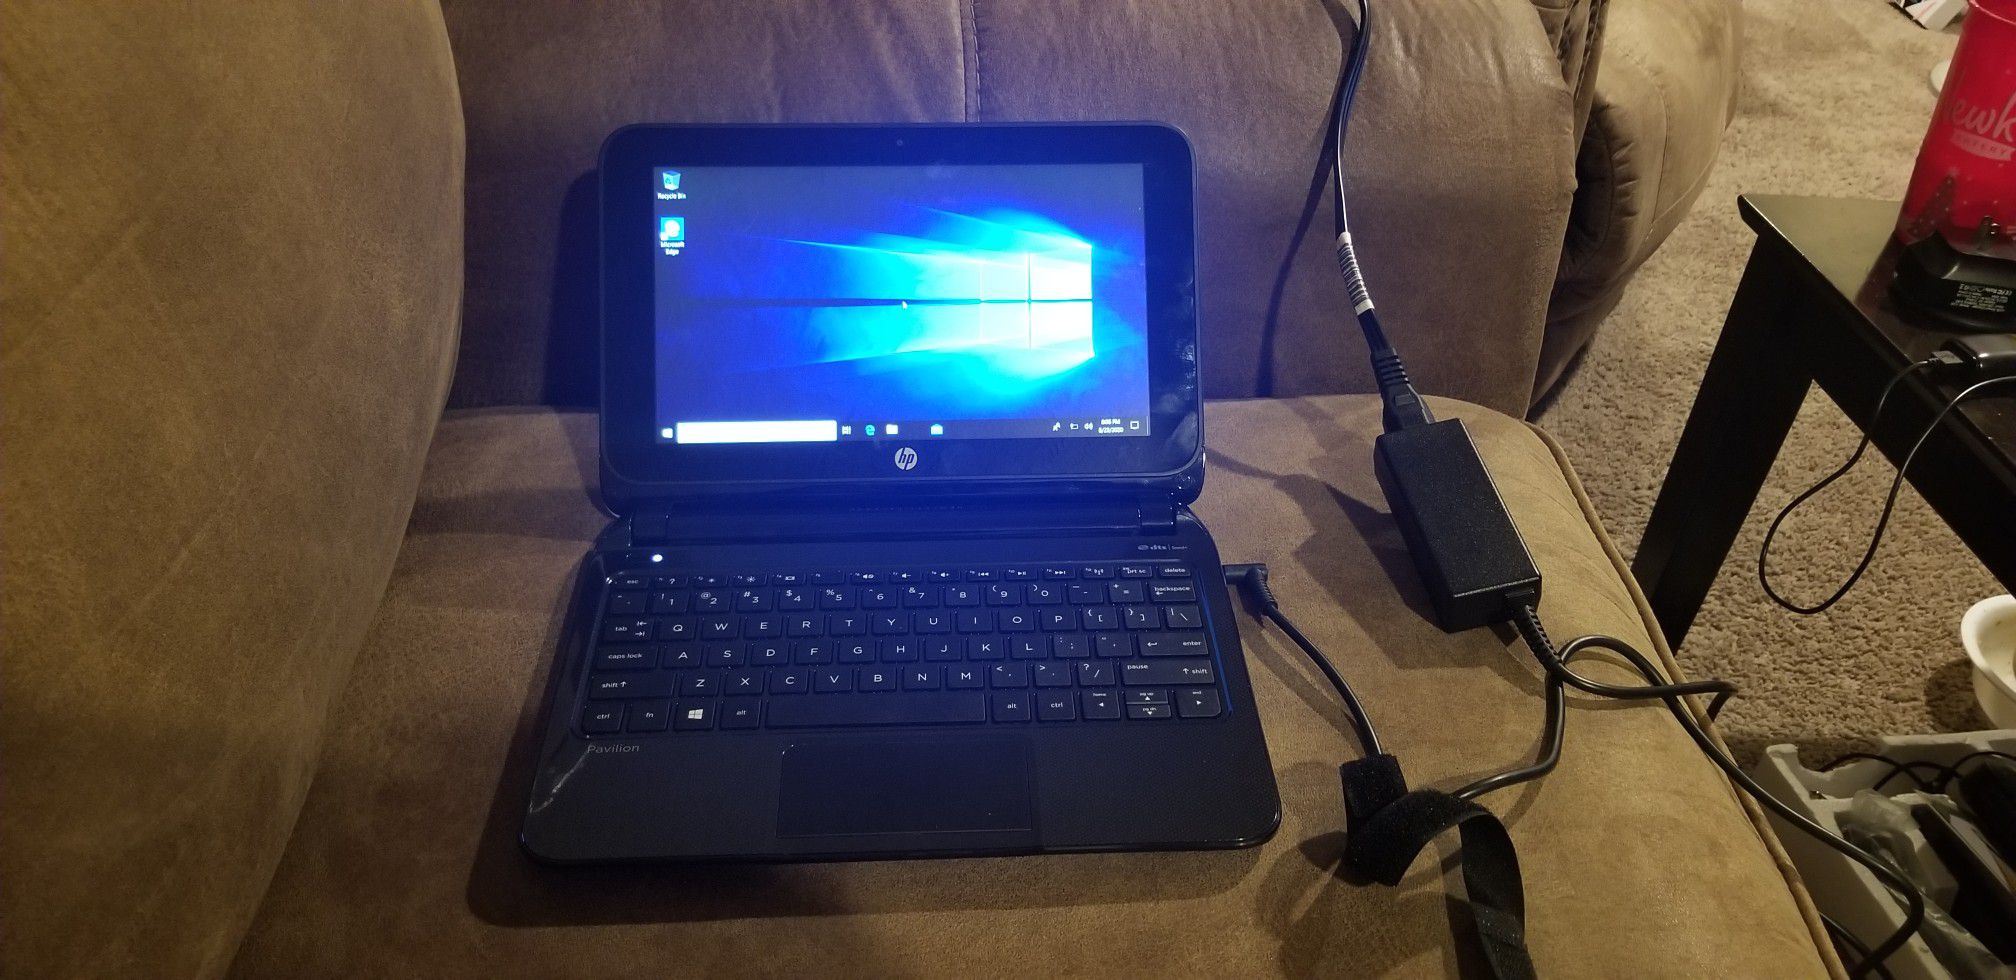 Hp 10 inch touchscreen laptop